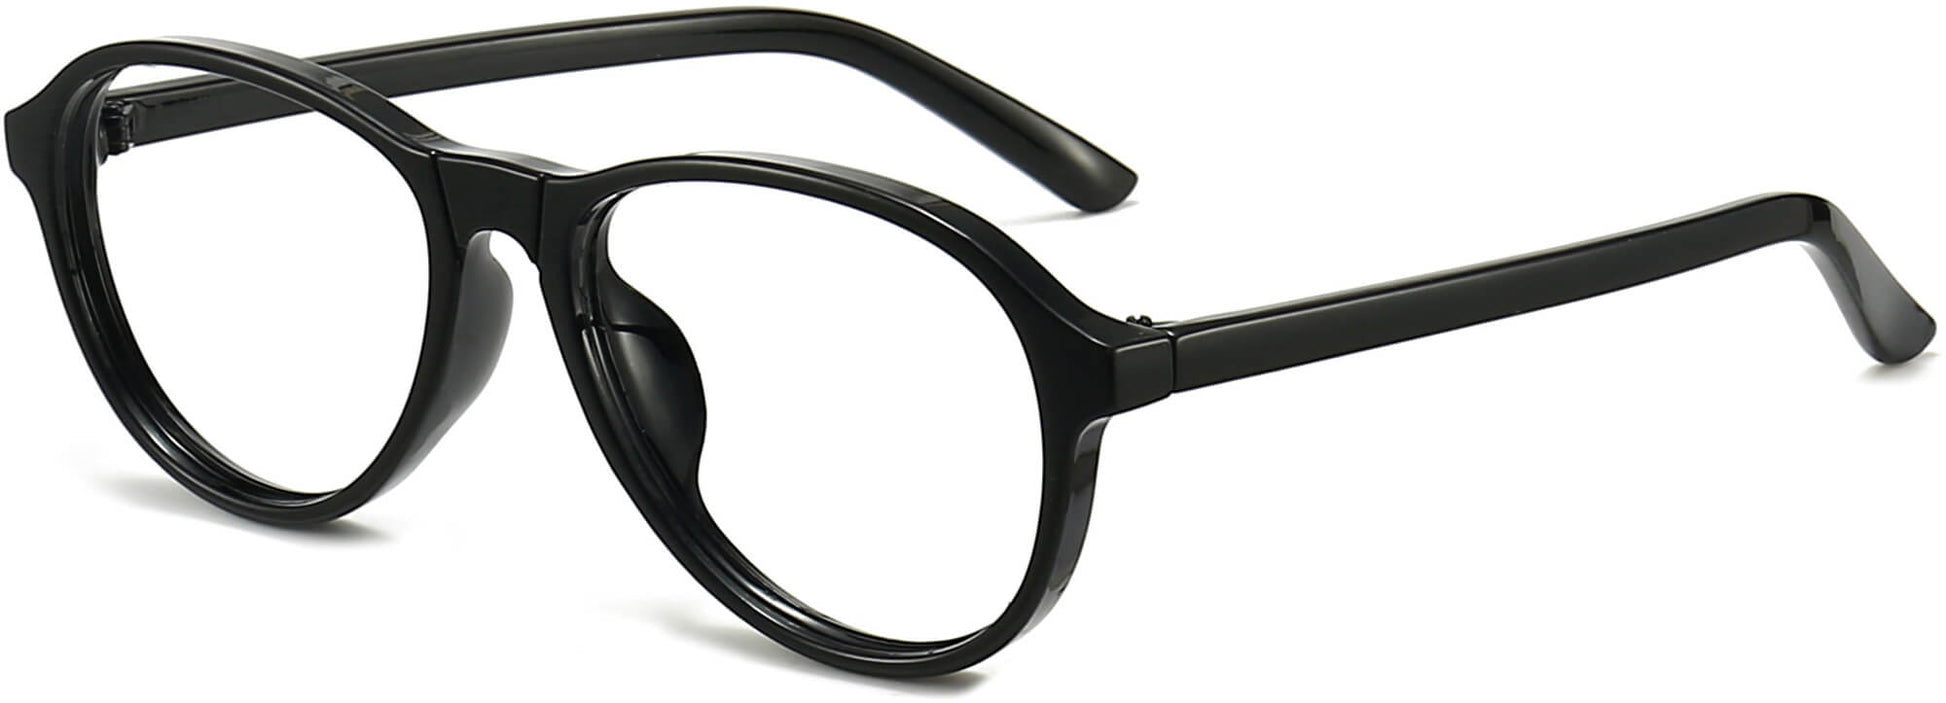 Kylan Aviator Black Eyeglasses from ANRRI, angle view